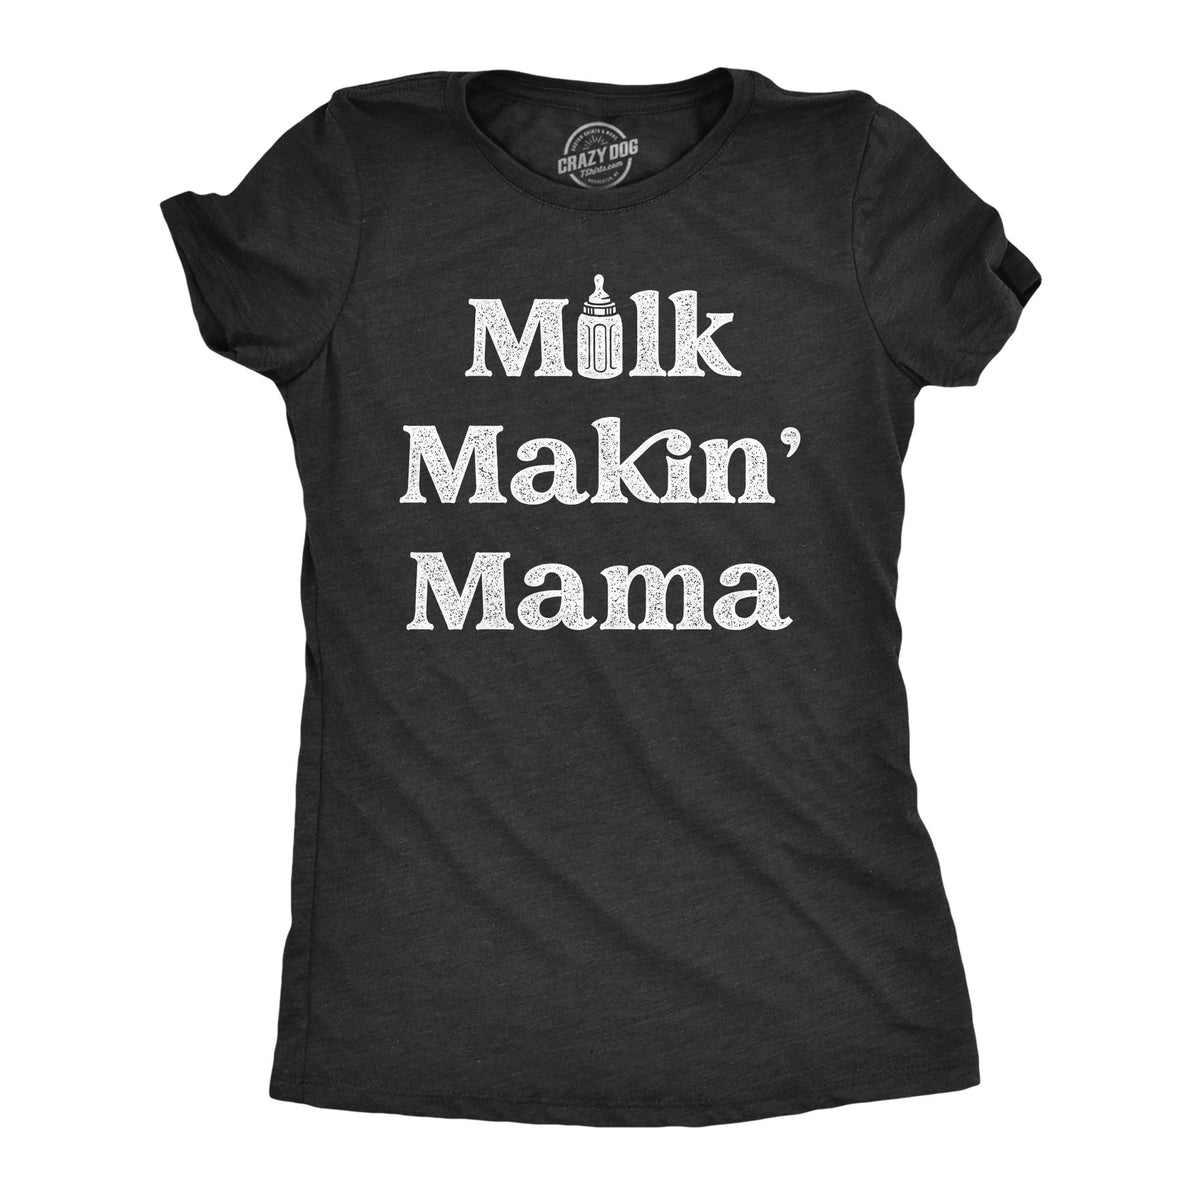 Funny Heather Black - MILK Milk Makin Mama Womens T Shirt Nerdy Mother&#39;s Day momfood Tee